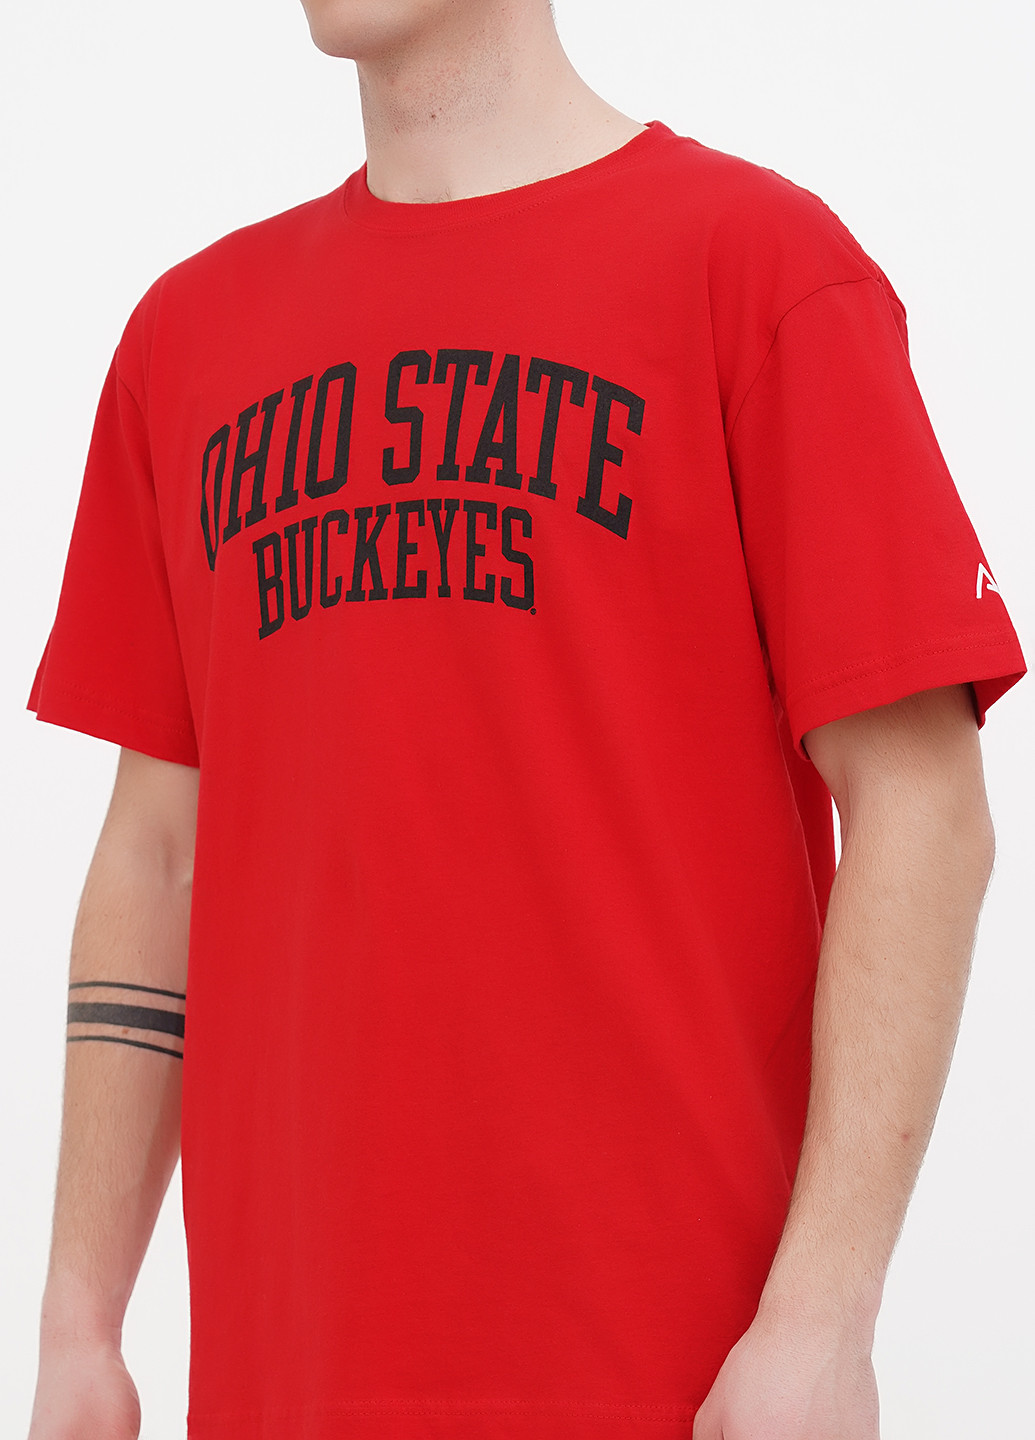 Червона футболка OHIO